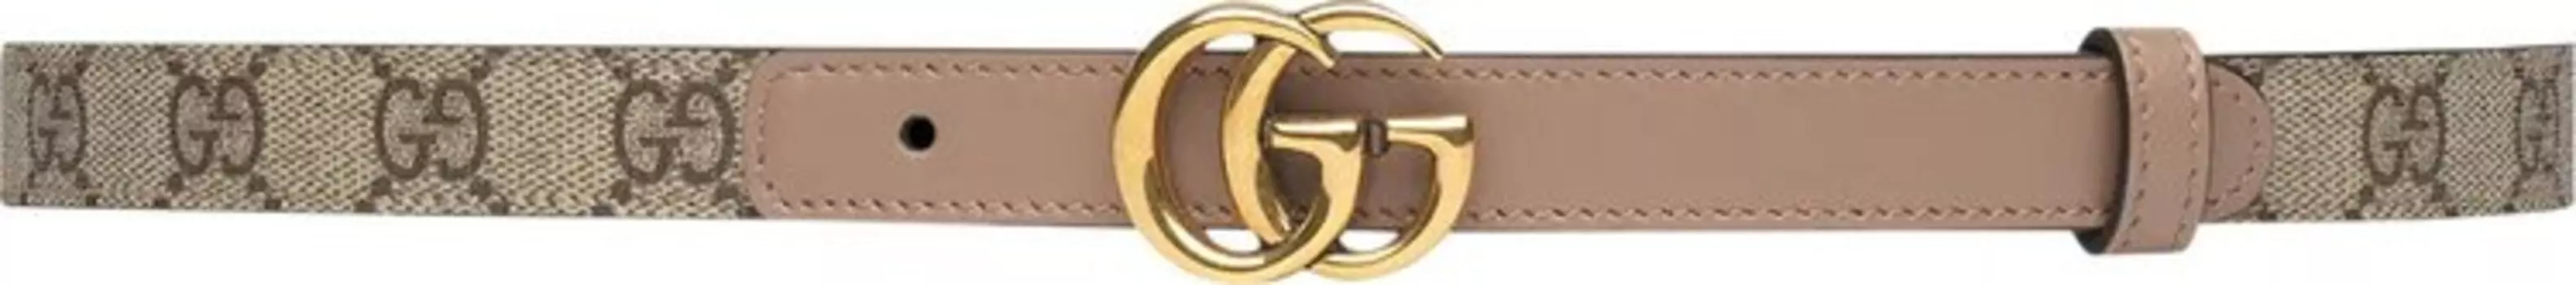 Ремень Gucci GG Marmont Thin Belt Beige/Ebony, бежевый